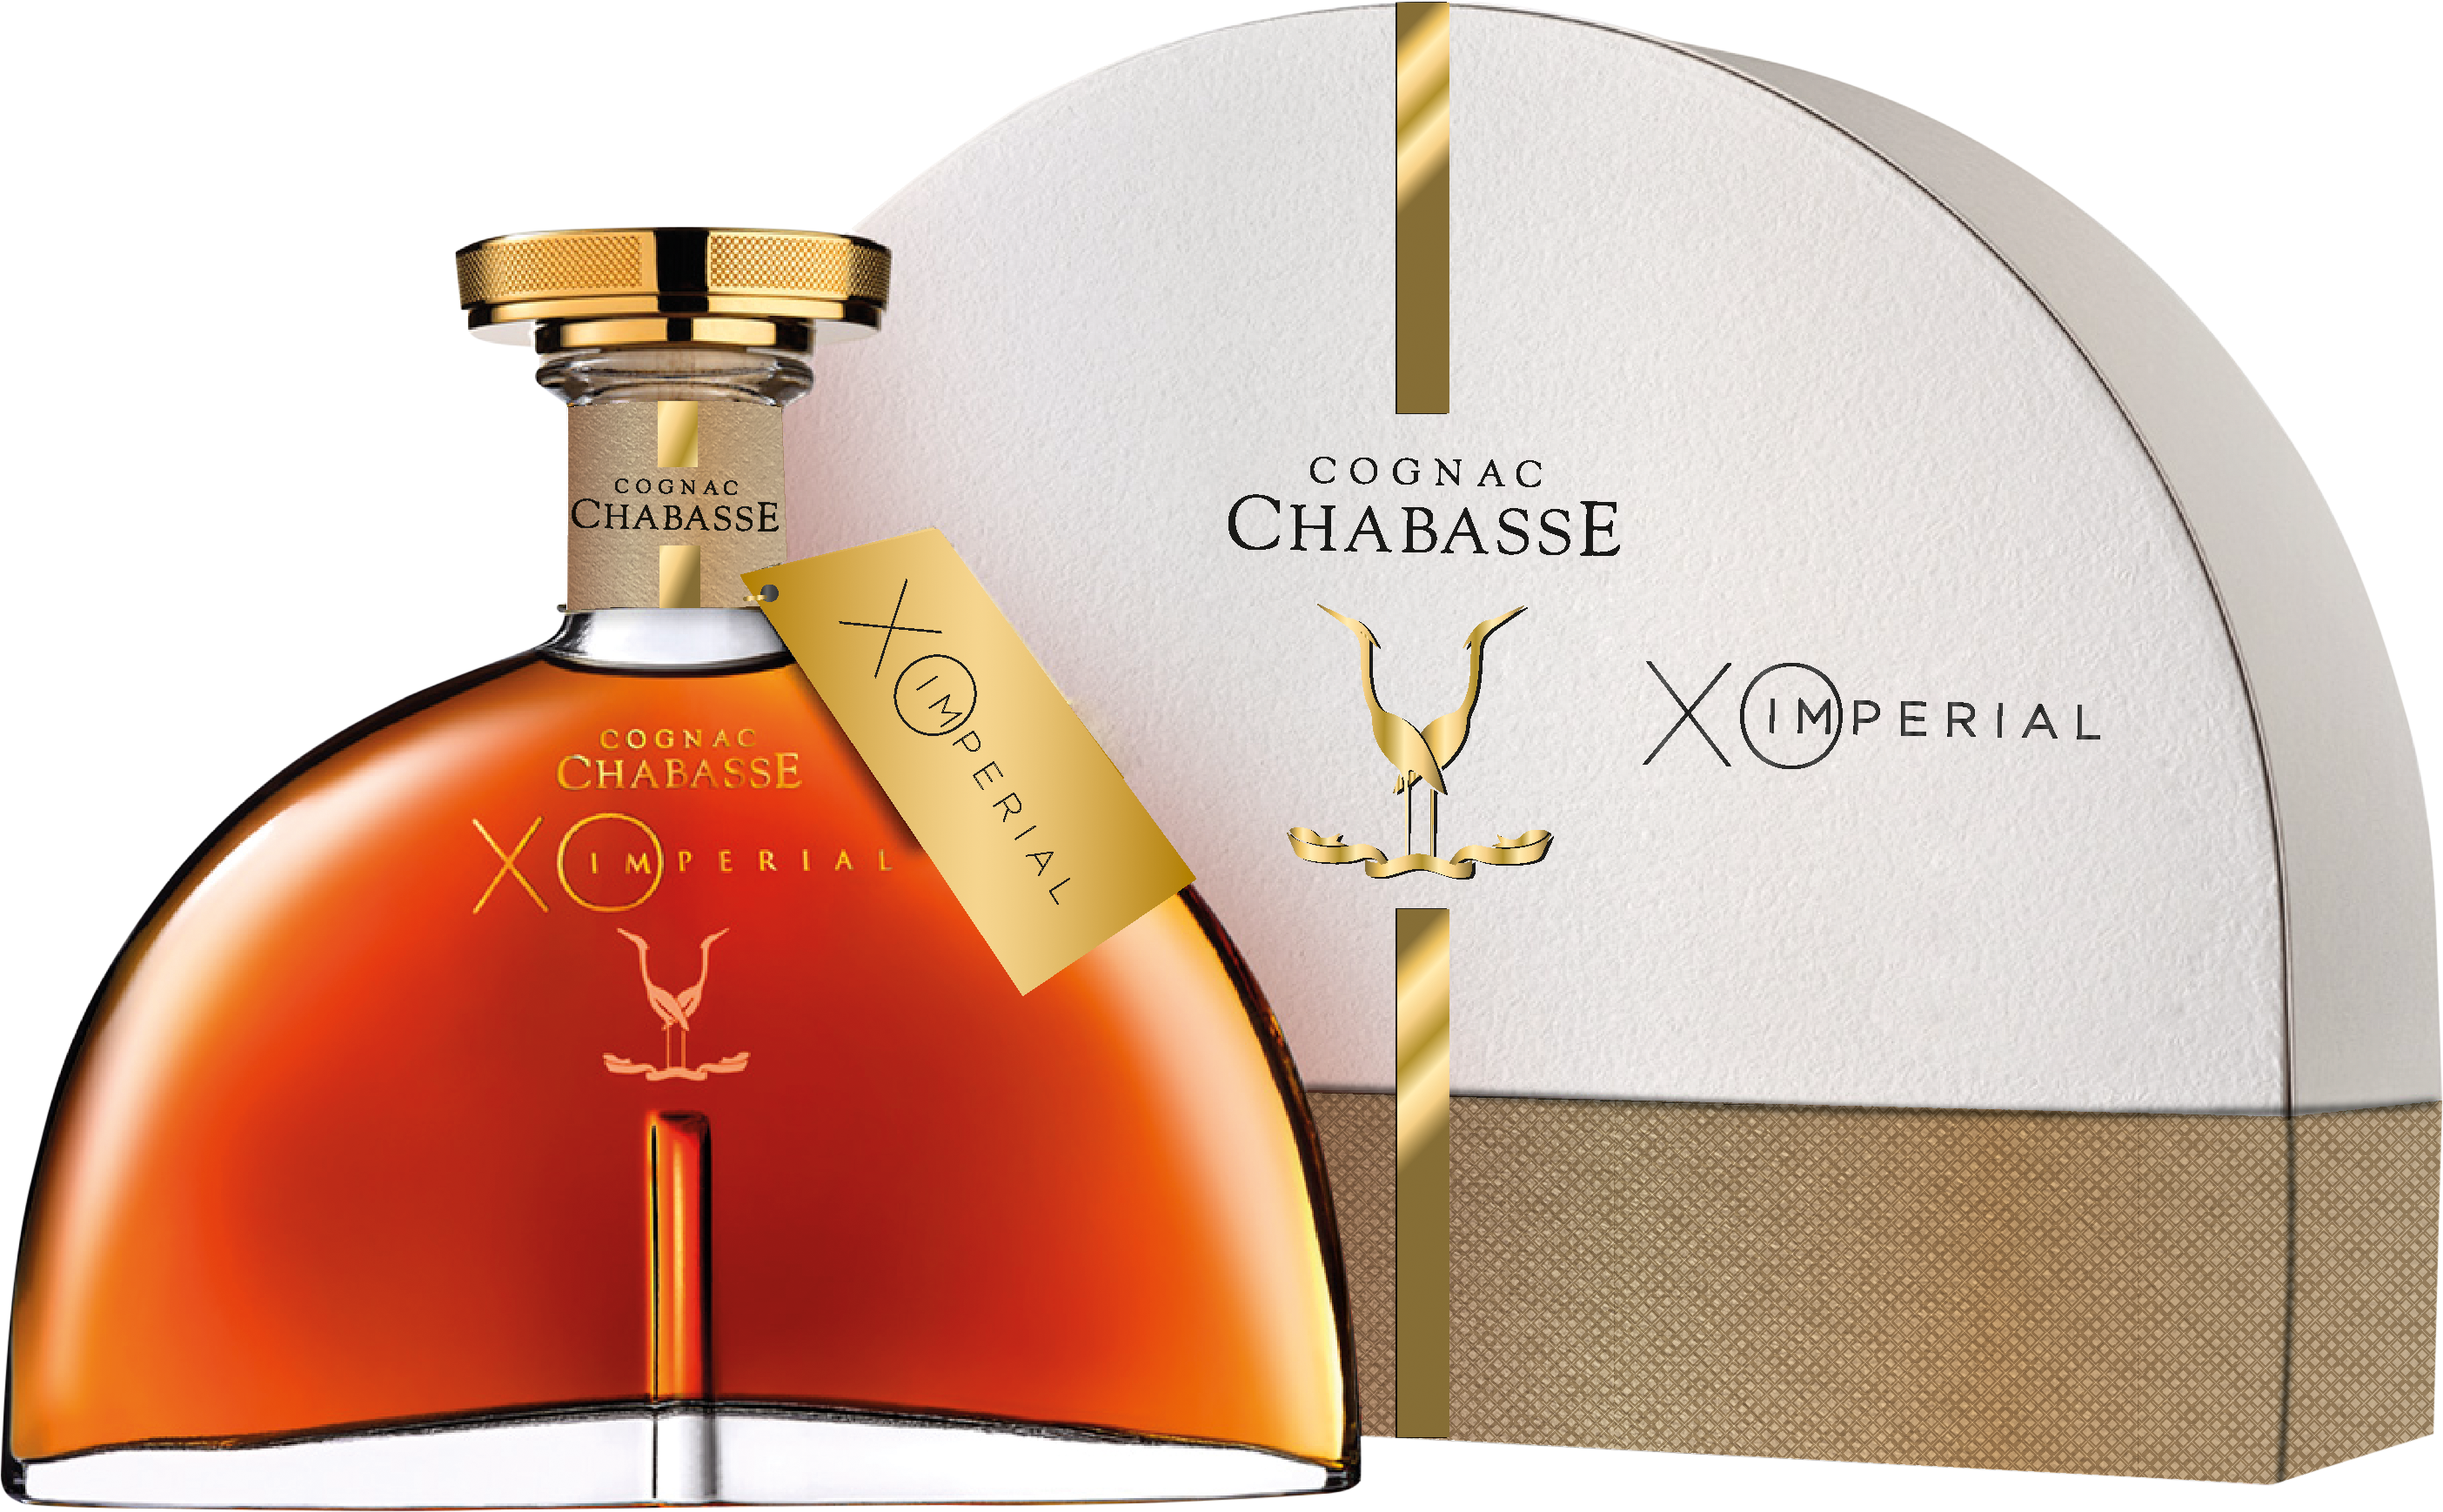 Cognac Chabasse XO Imperial in Halbmond Box